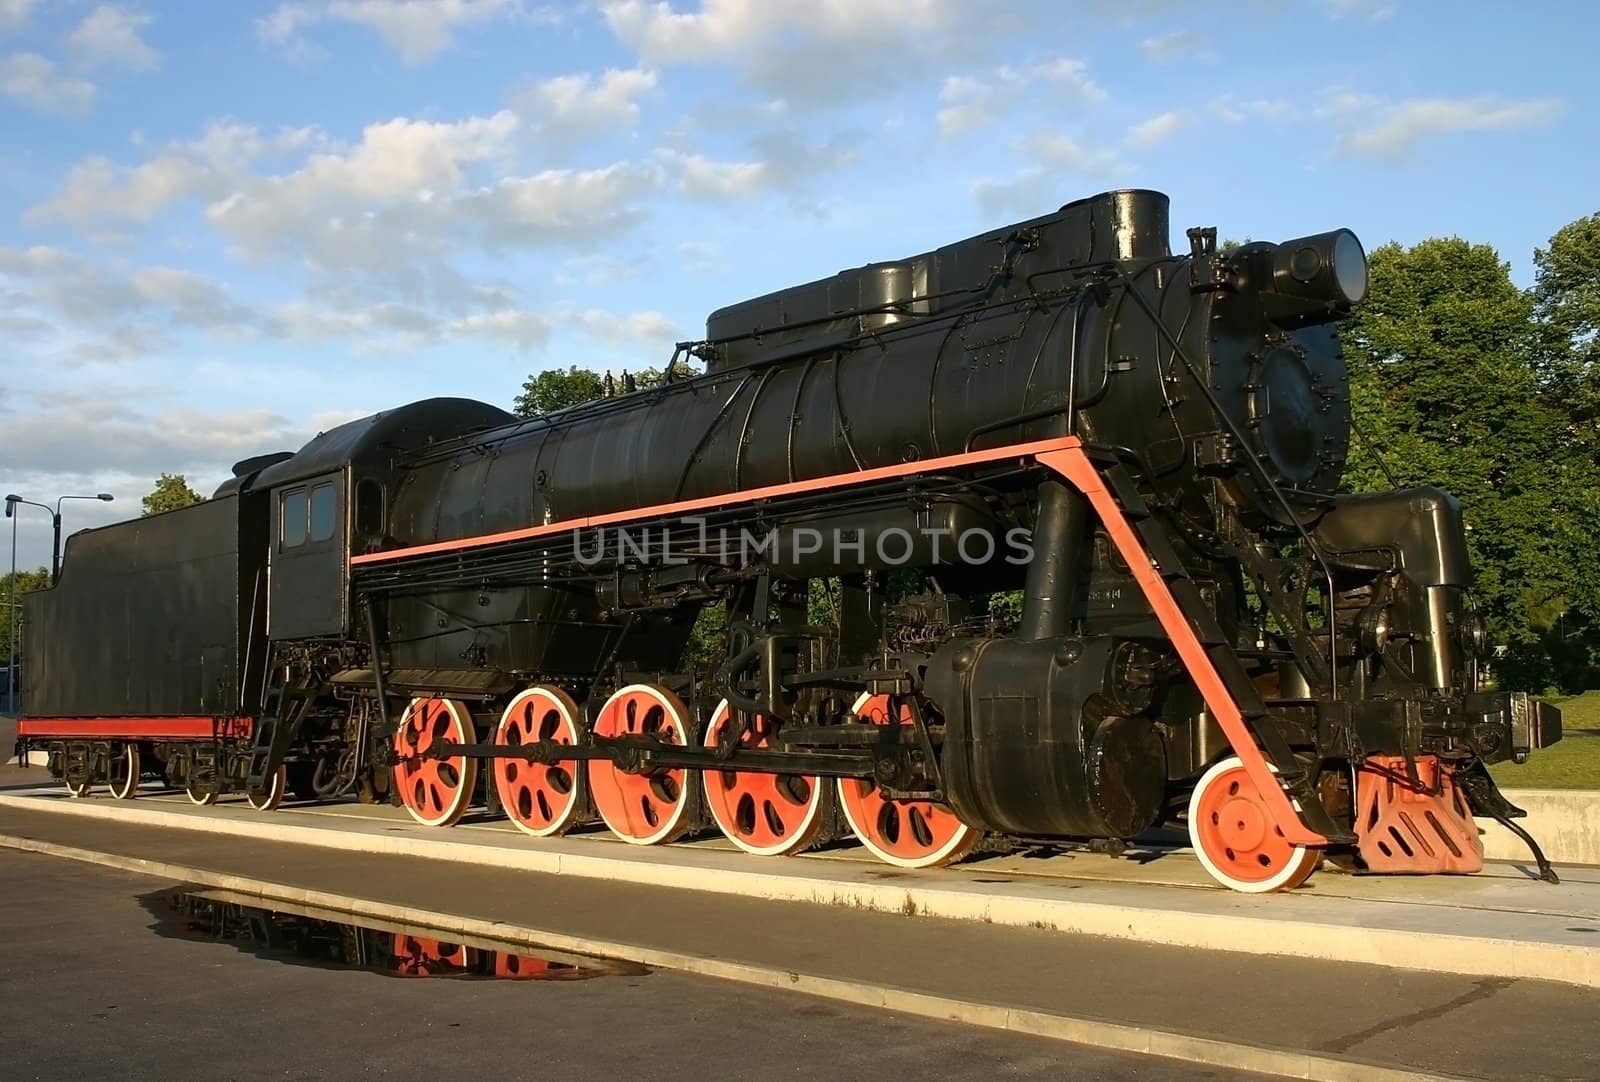  Steam locomotive old by AlexandrePavlov